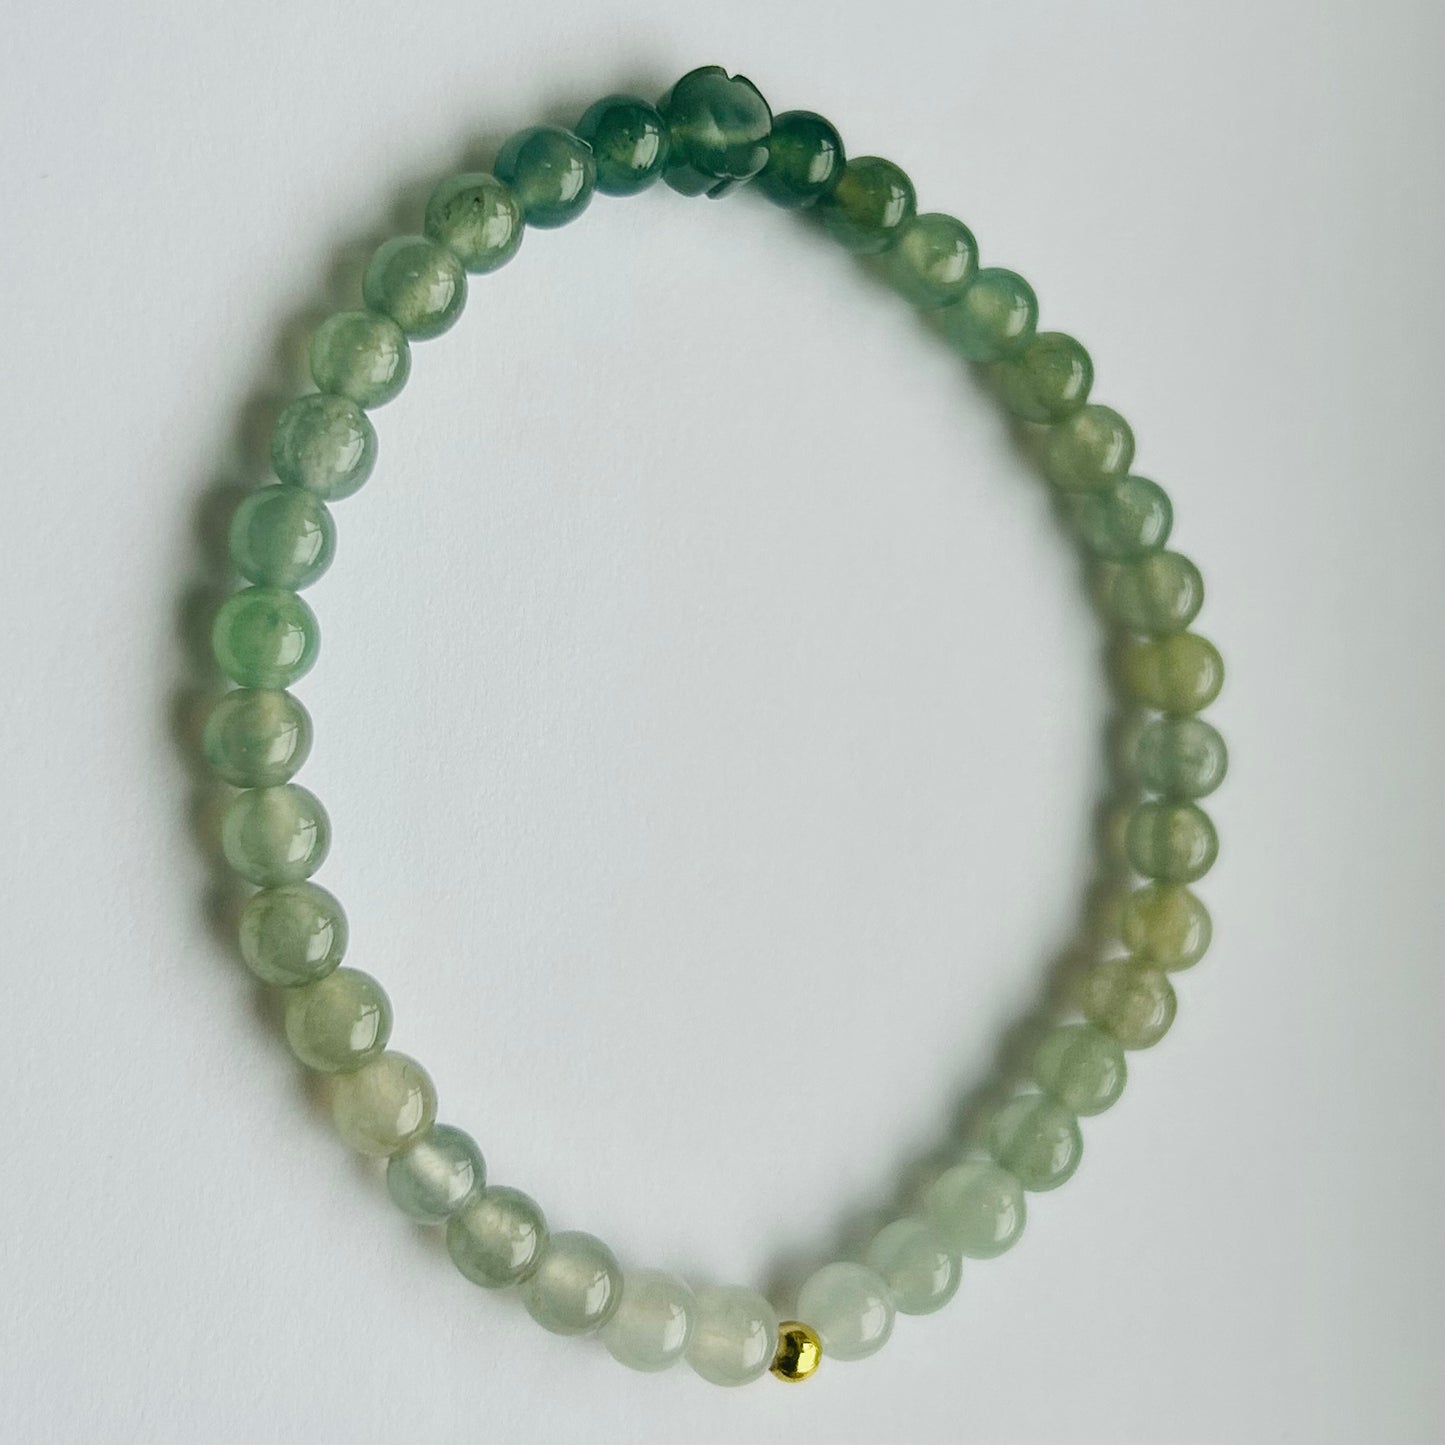 100% Untreated Genuine Type A Burmese Jadeite Bracelet, Gradient Color Green Jadeite Bracelet, Clover Shape Focal Bead, 4mm, Handmade in Canada|天然缅甸冰透渐变绿翡翠圆珠四叶草手串